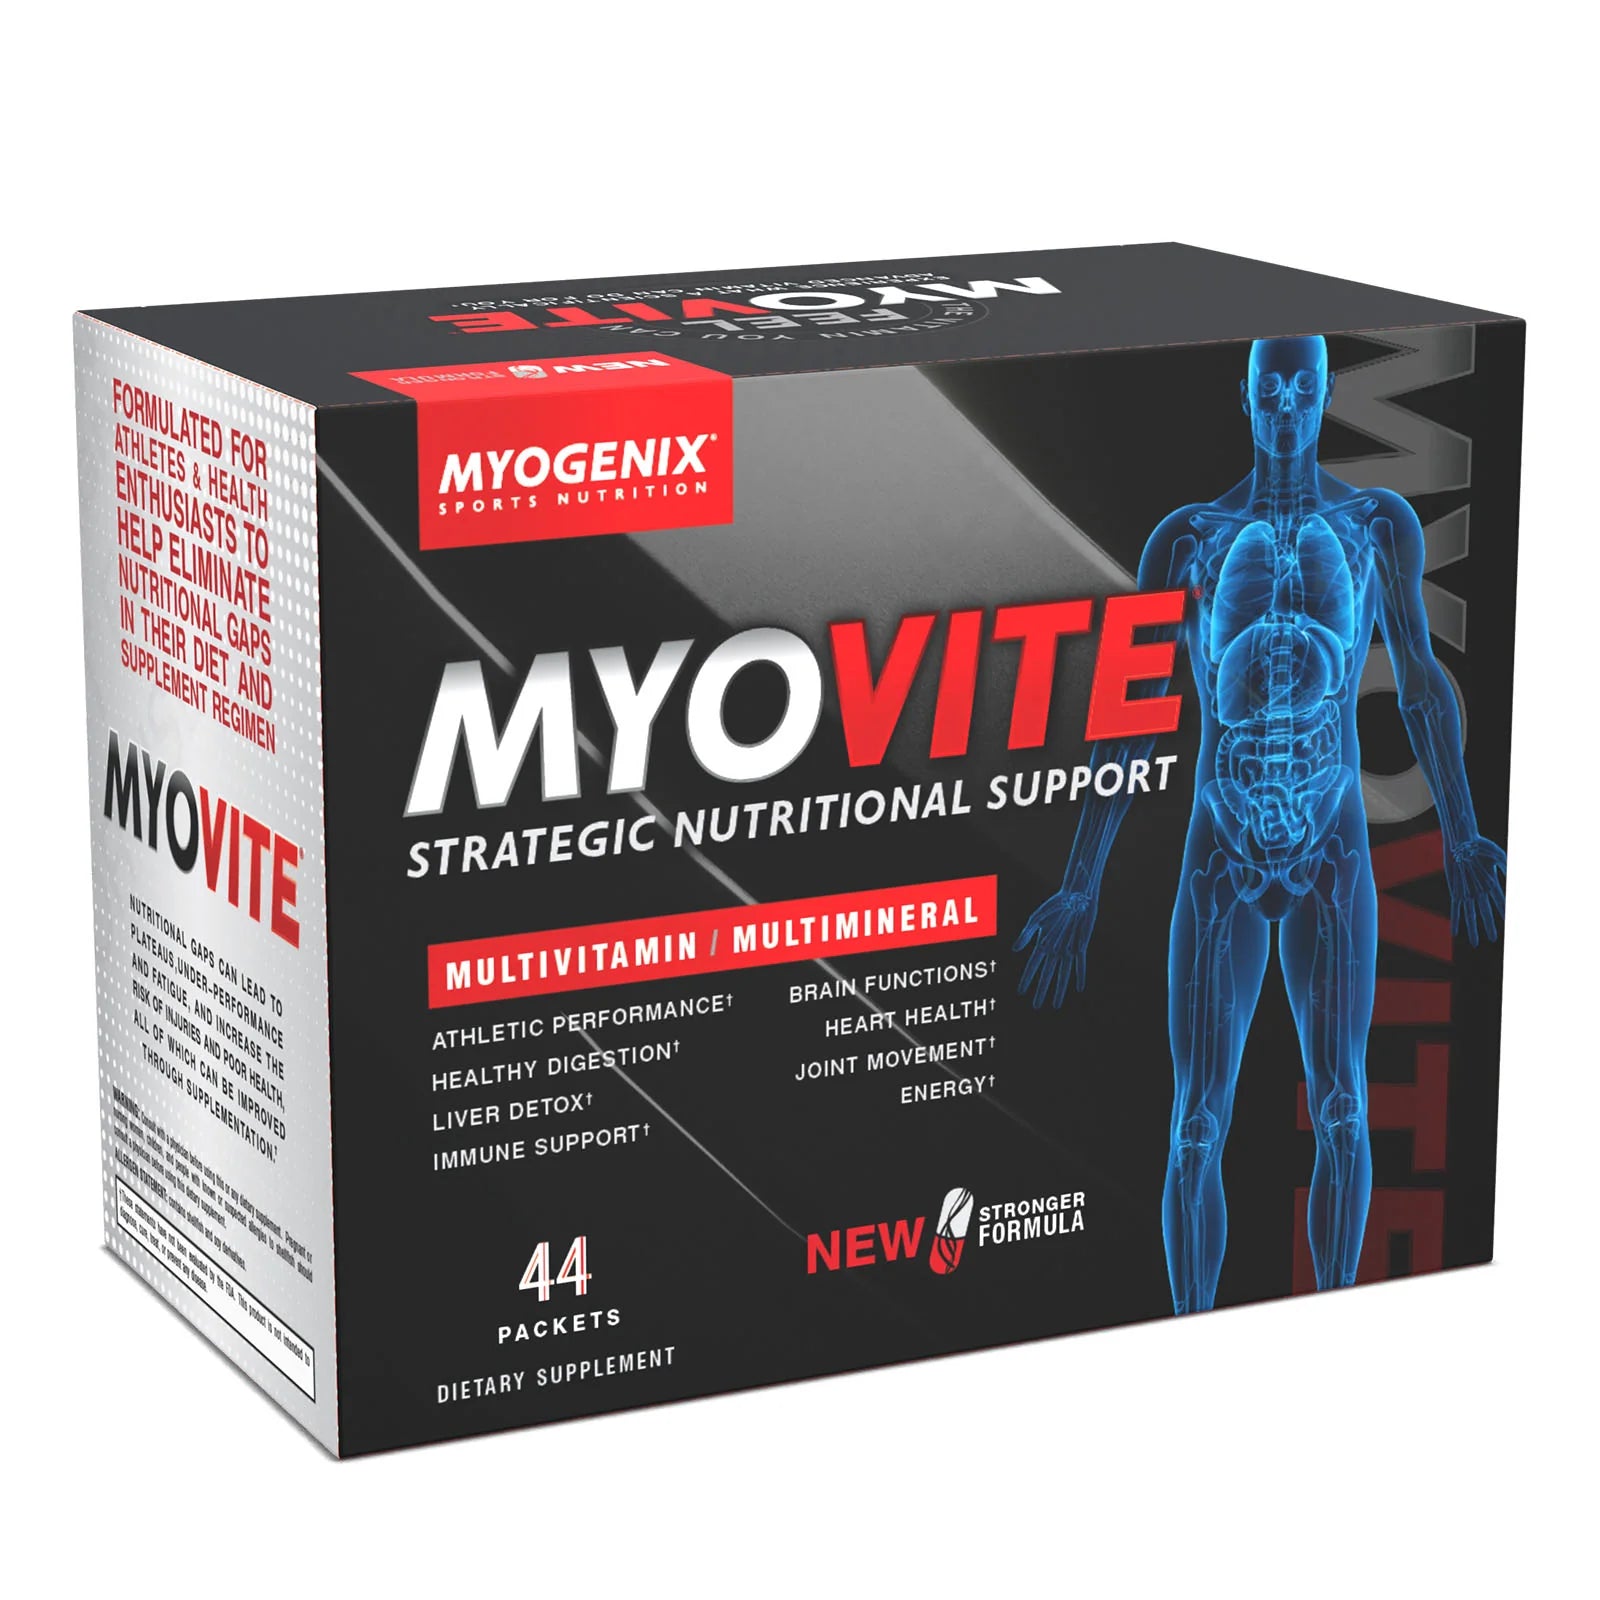 MyoVite Strategic Nutritional Support